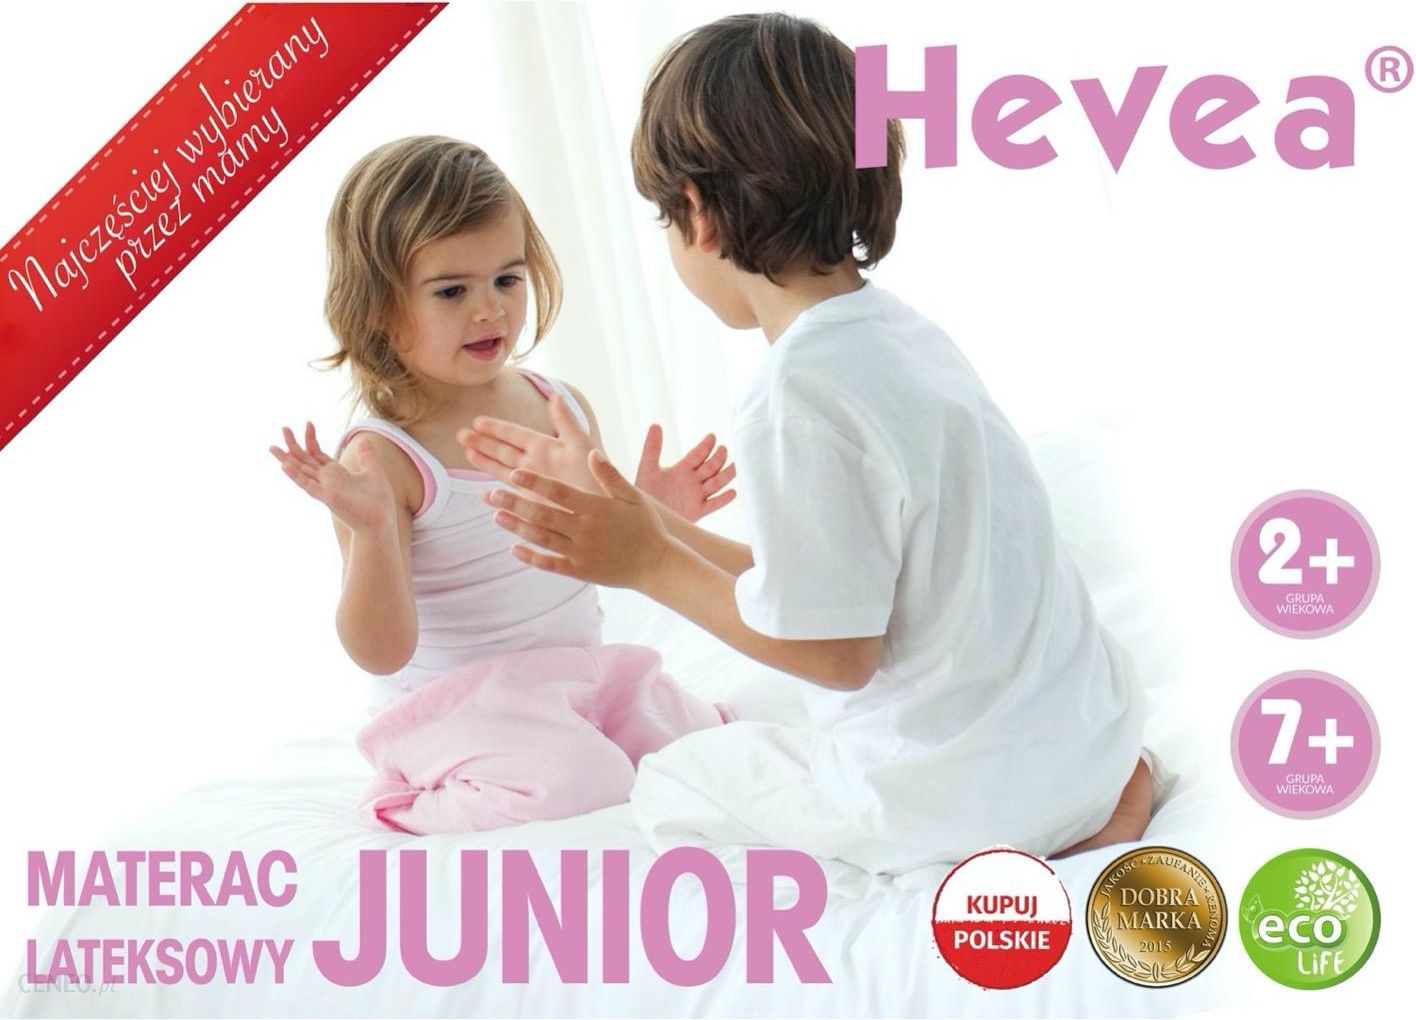 Hevea Materac lateksowy Junior 160x80